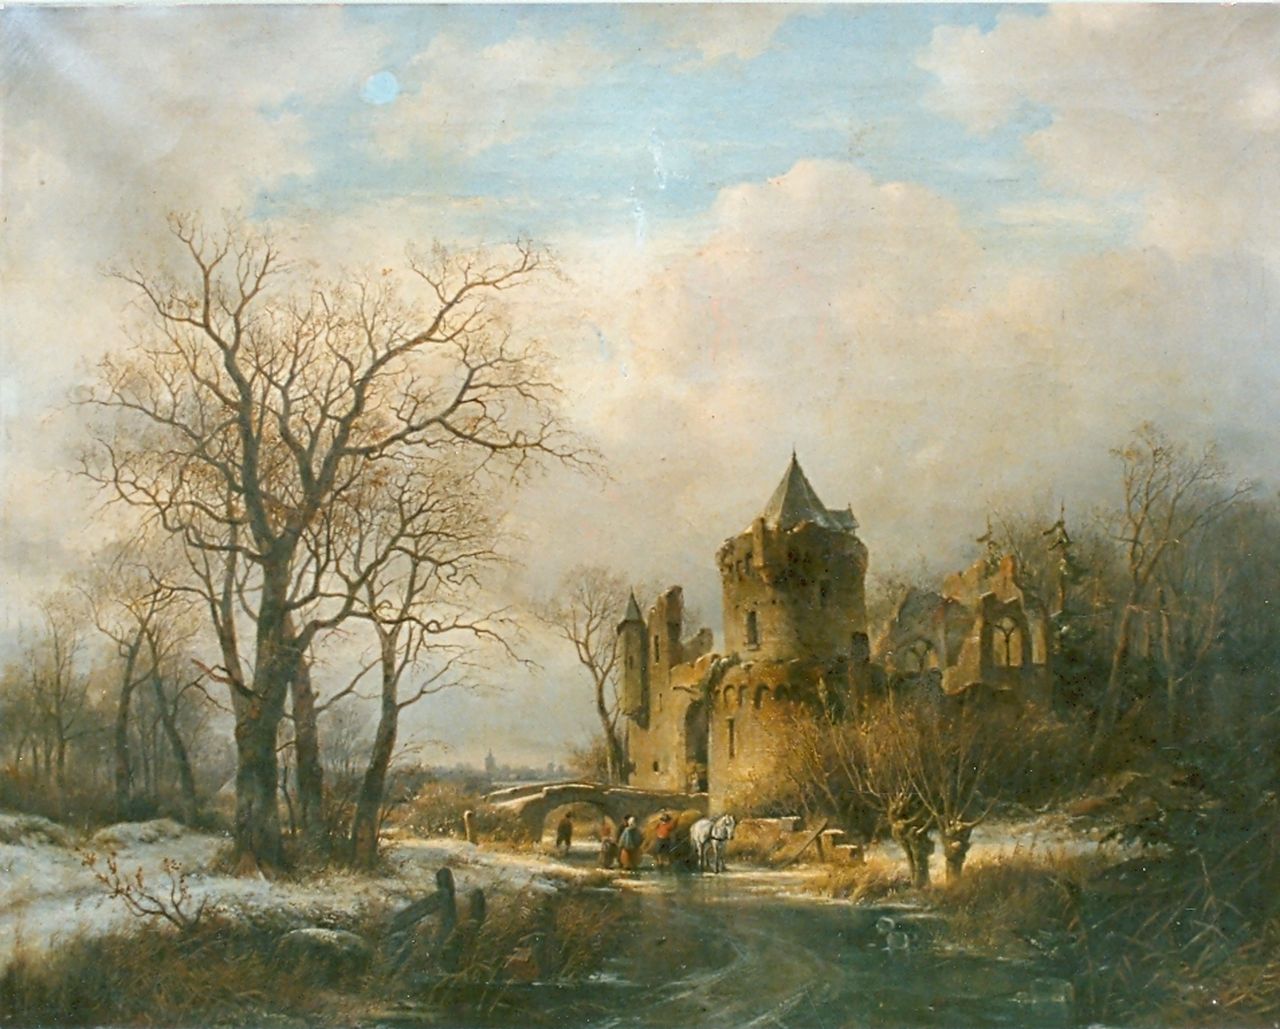 Ravenswaay J. van | Jan van Ravenswaay, Winter landscape, oil on canvas 76.6 x 100.2 cm, signed l.c. and dated 1848